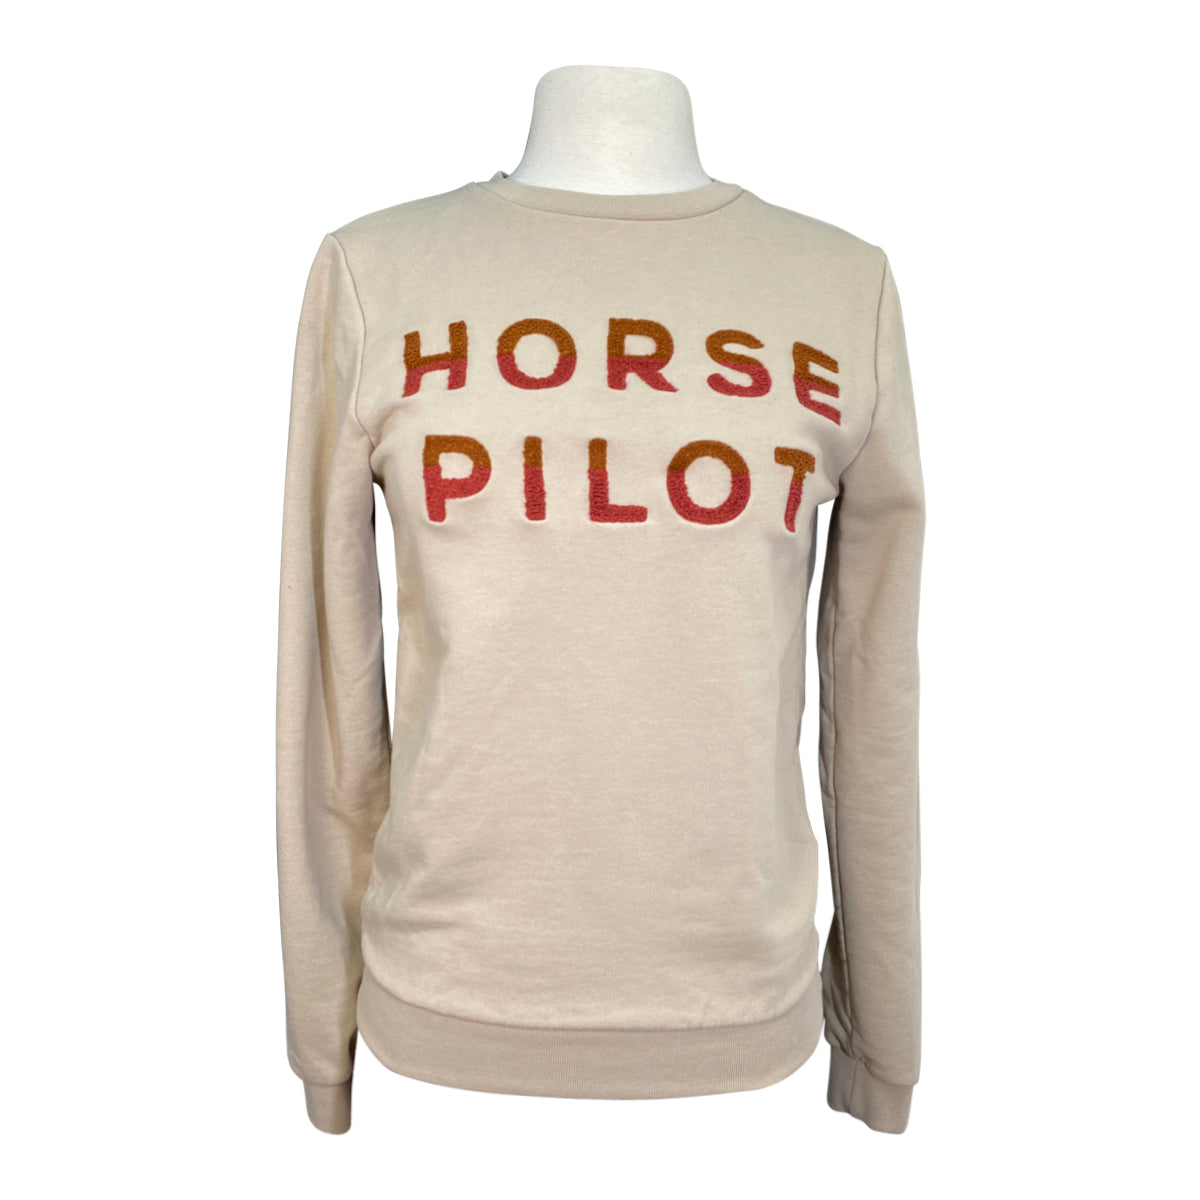 Horse Pilot 'Team' Sweatshirt in Tan/Orange